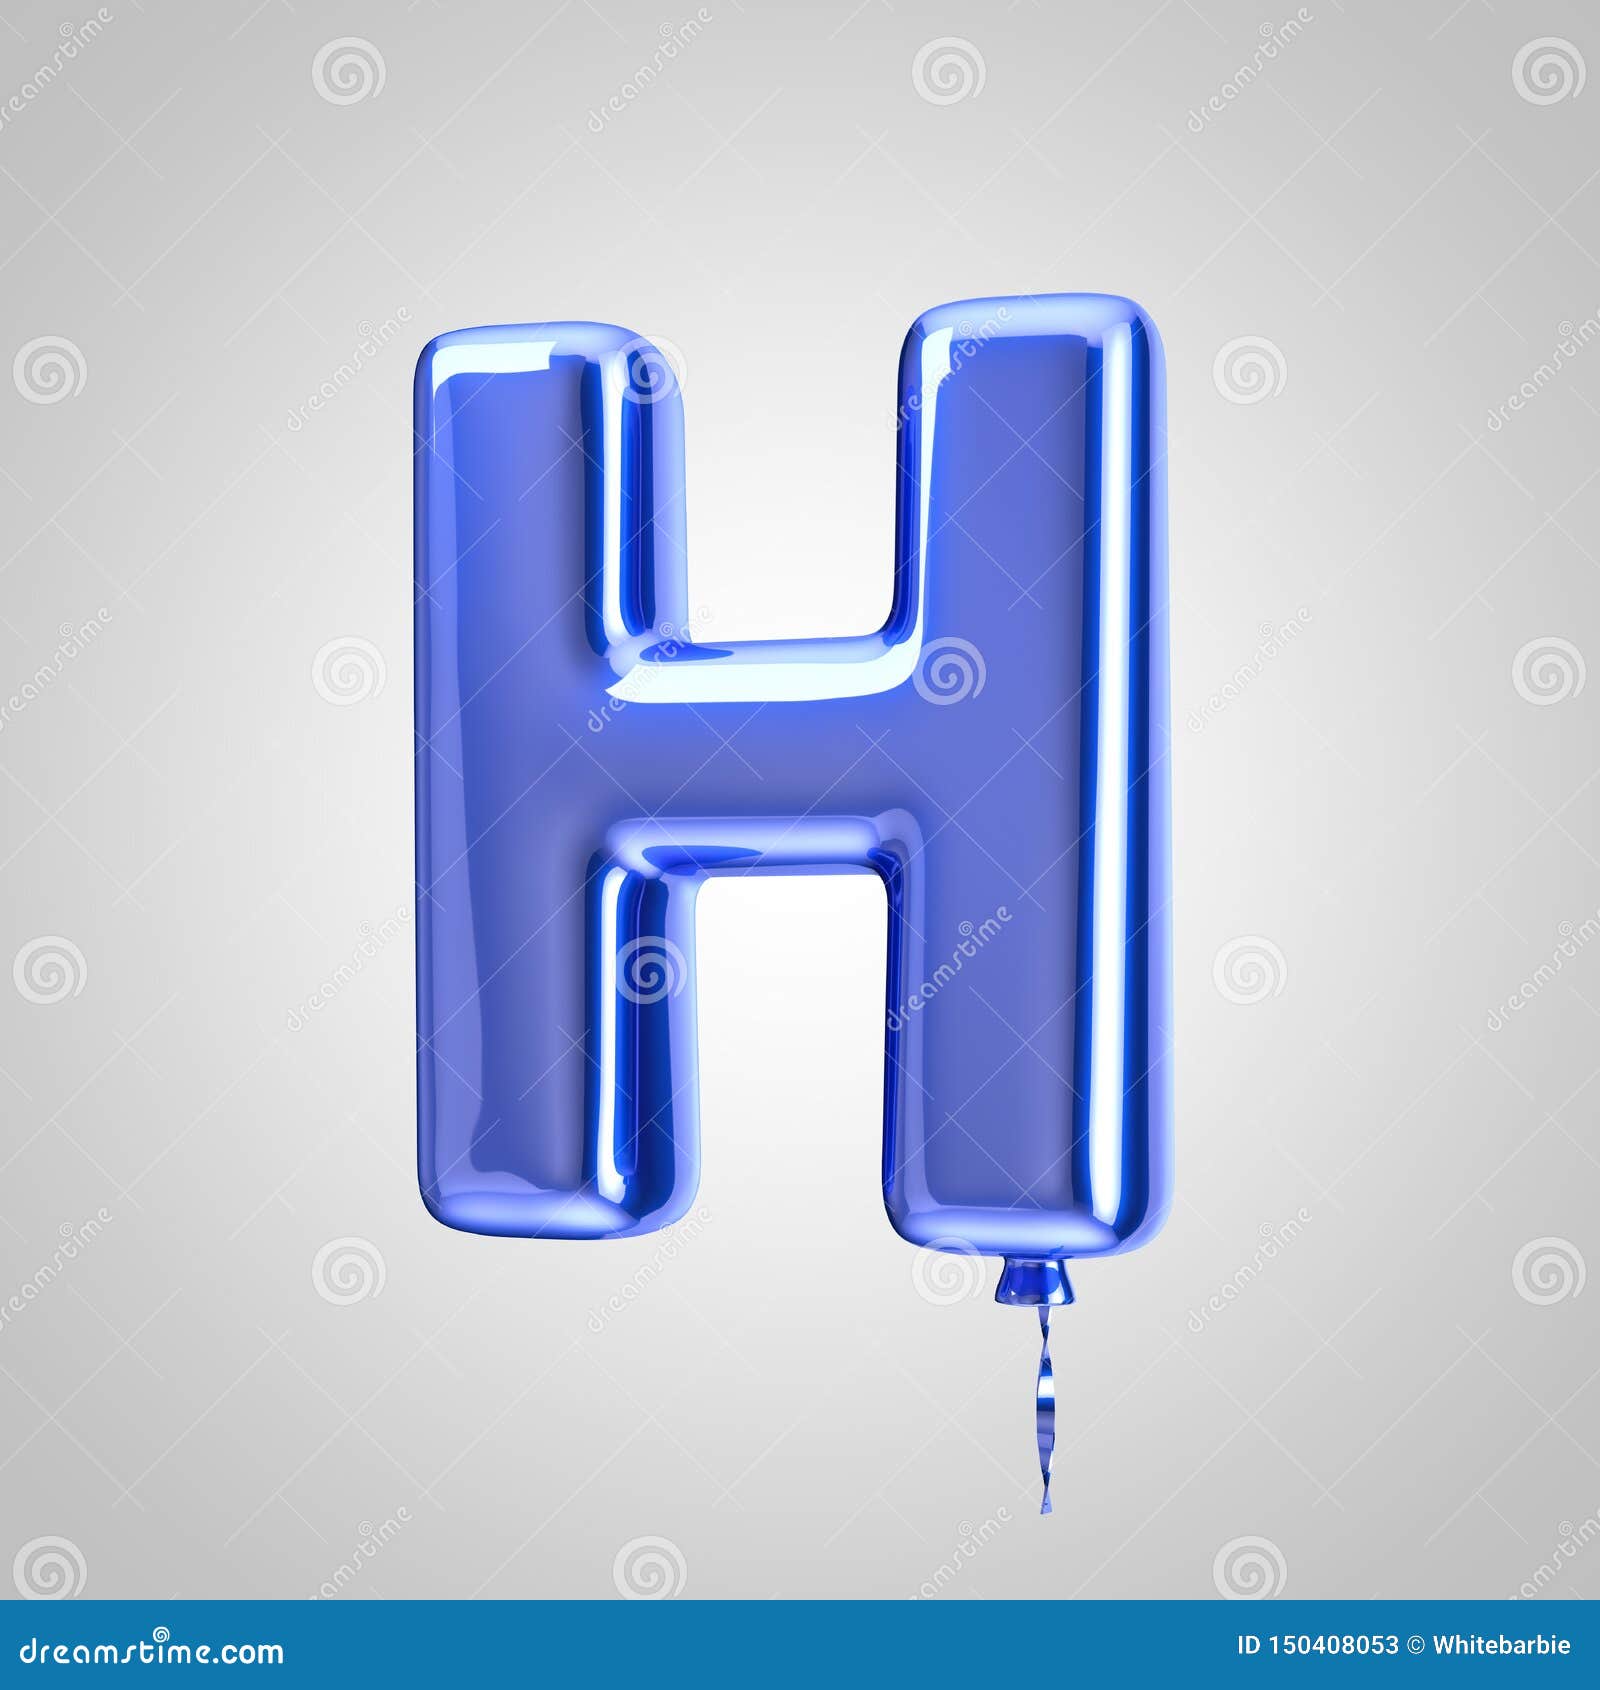 Shiny Metallic Blue Balloon Letter H Uppercase Isolated on White ...